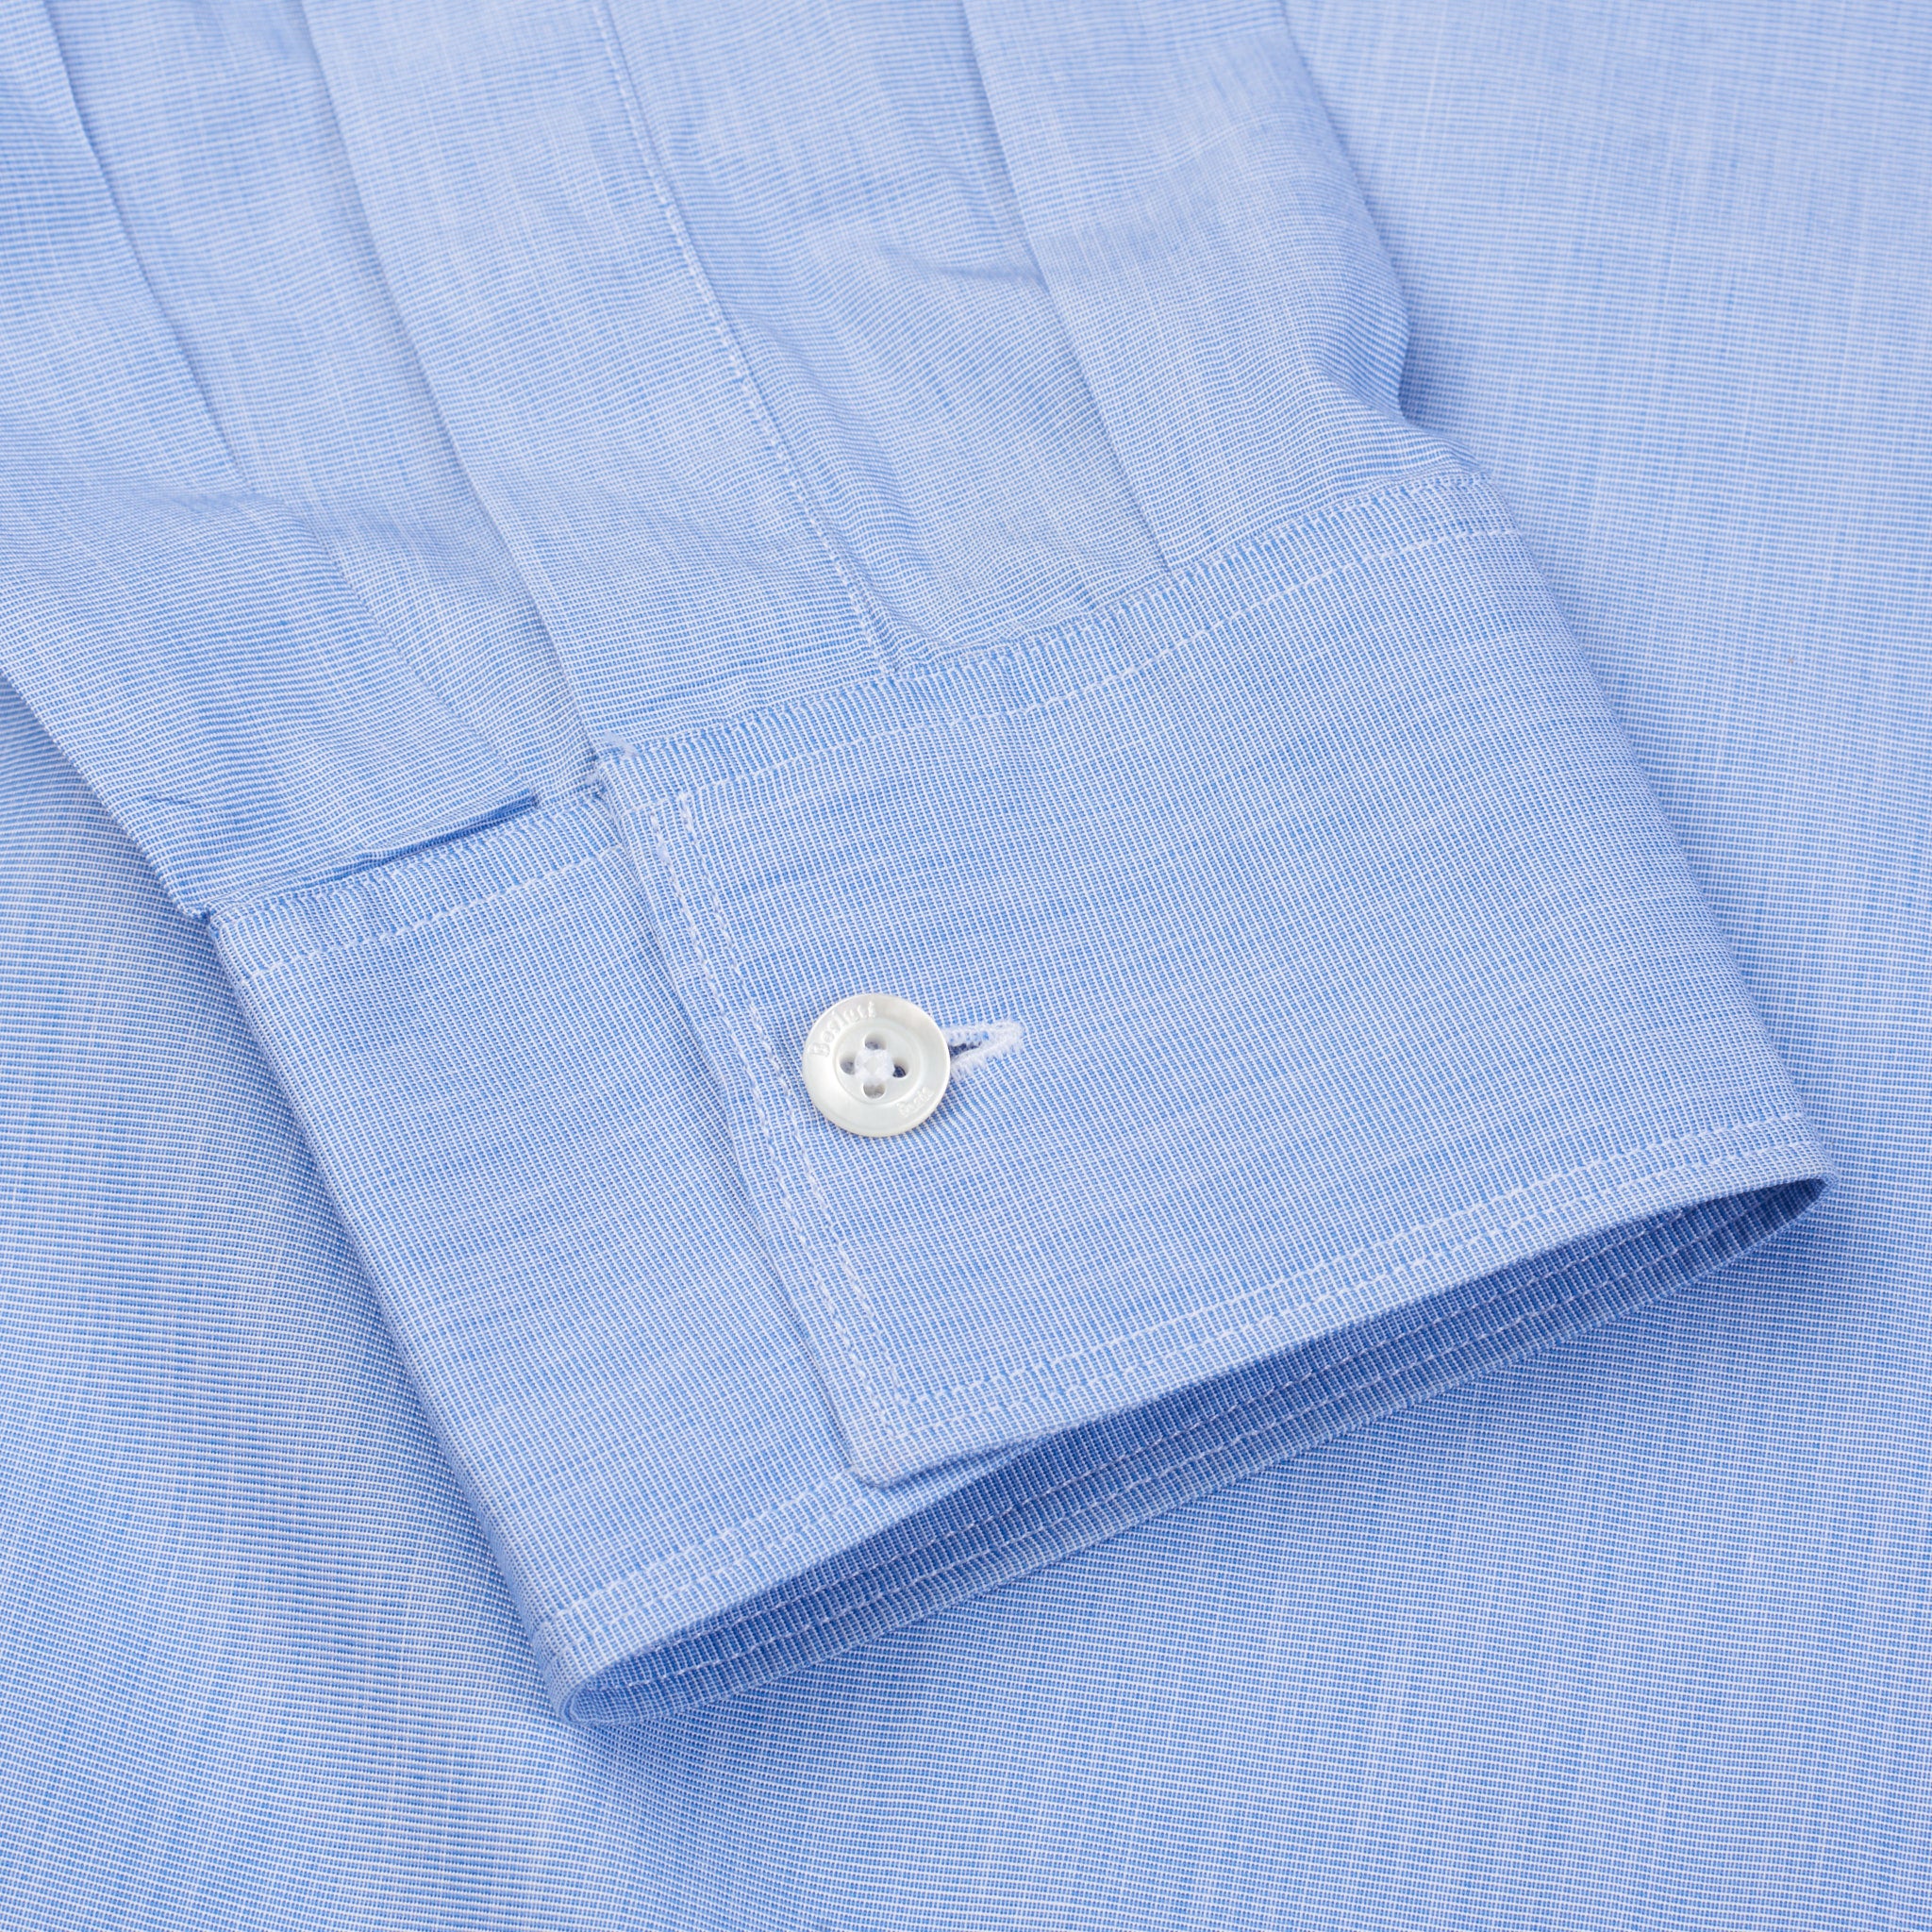 BERLUTI Blue Cotton End-on-End Collarless Pop-Over Shirt Size R40 NEW US L BERLUTI